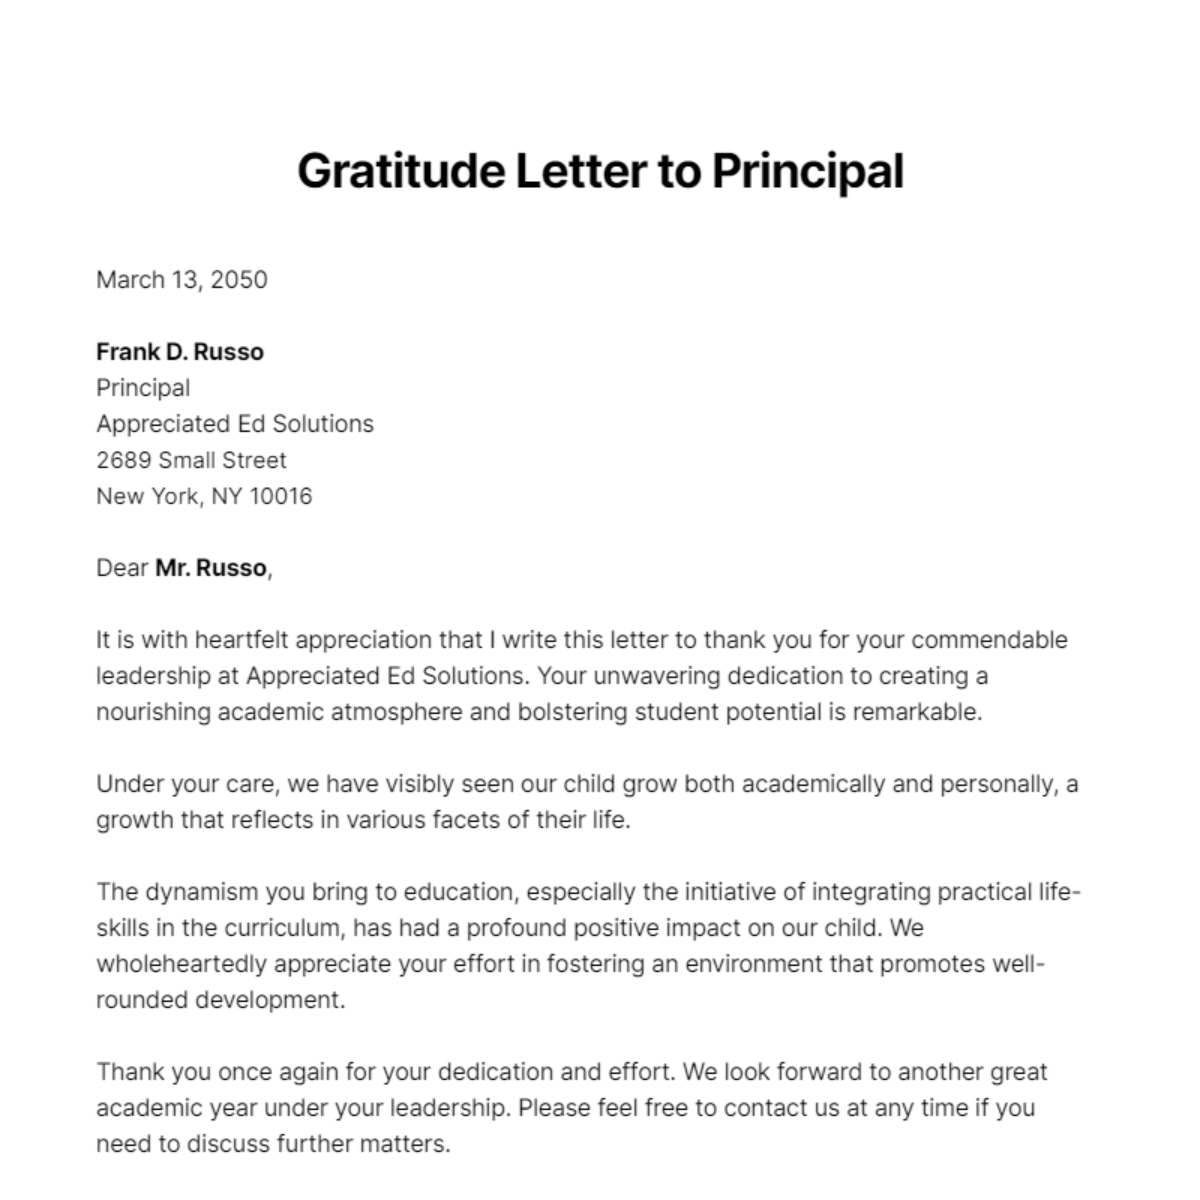 Gratitude Letter to Principal Template